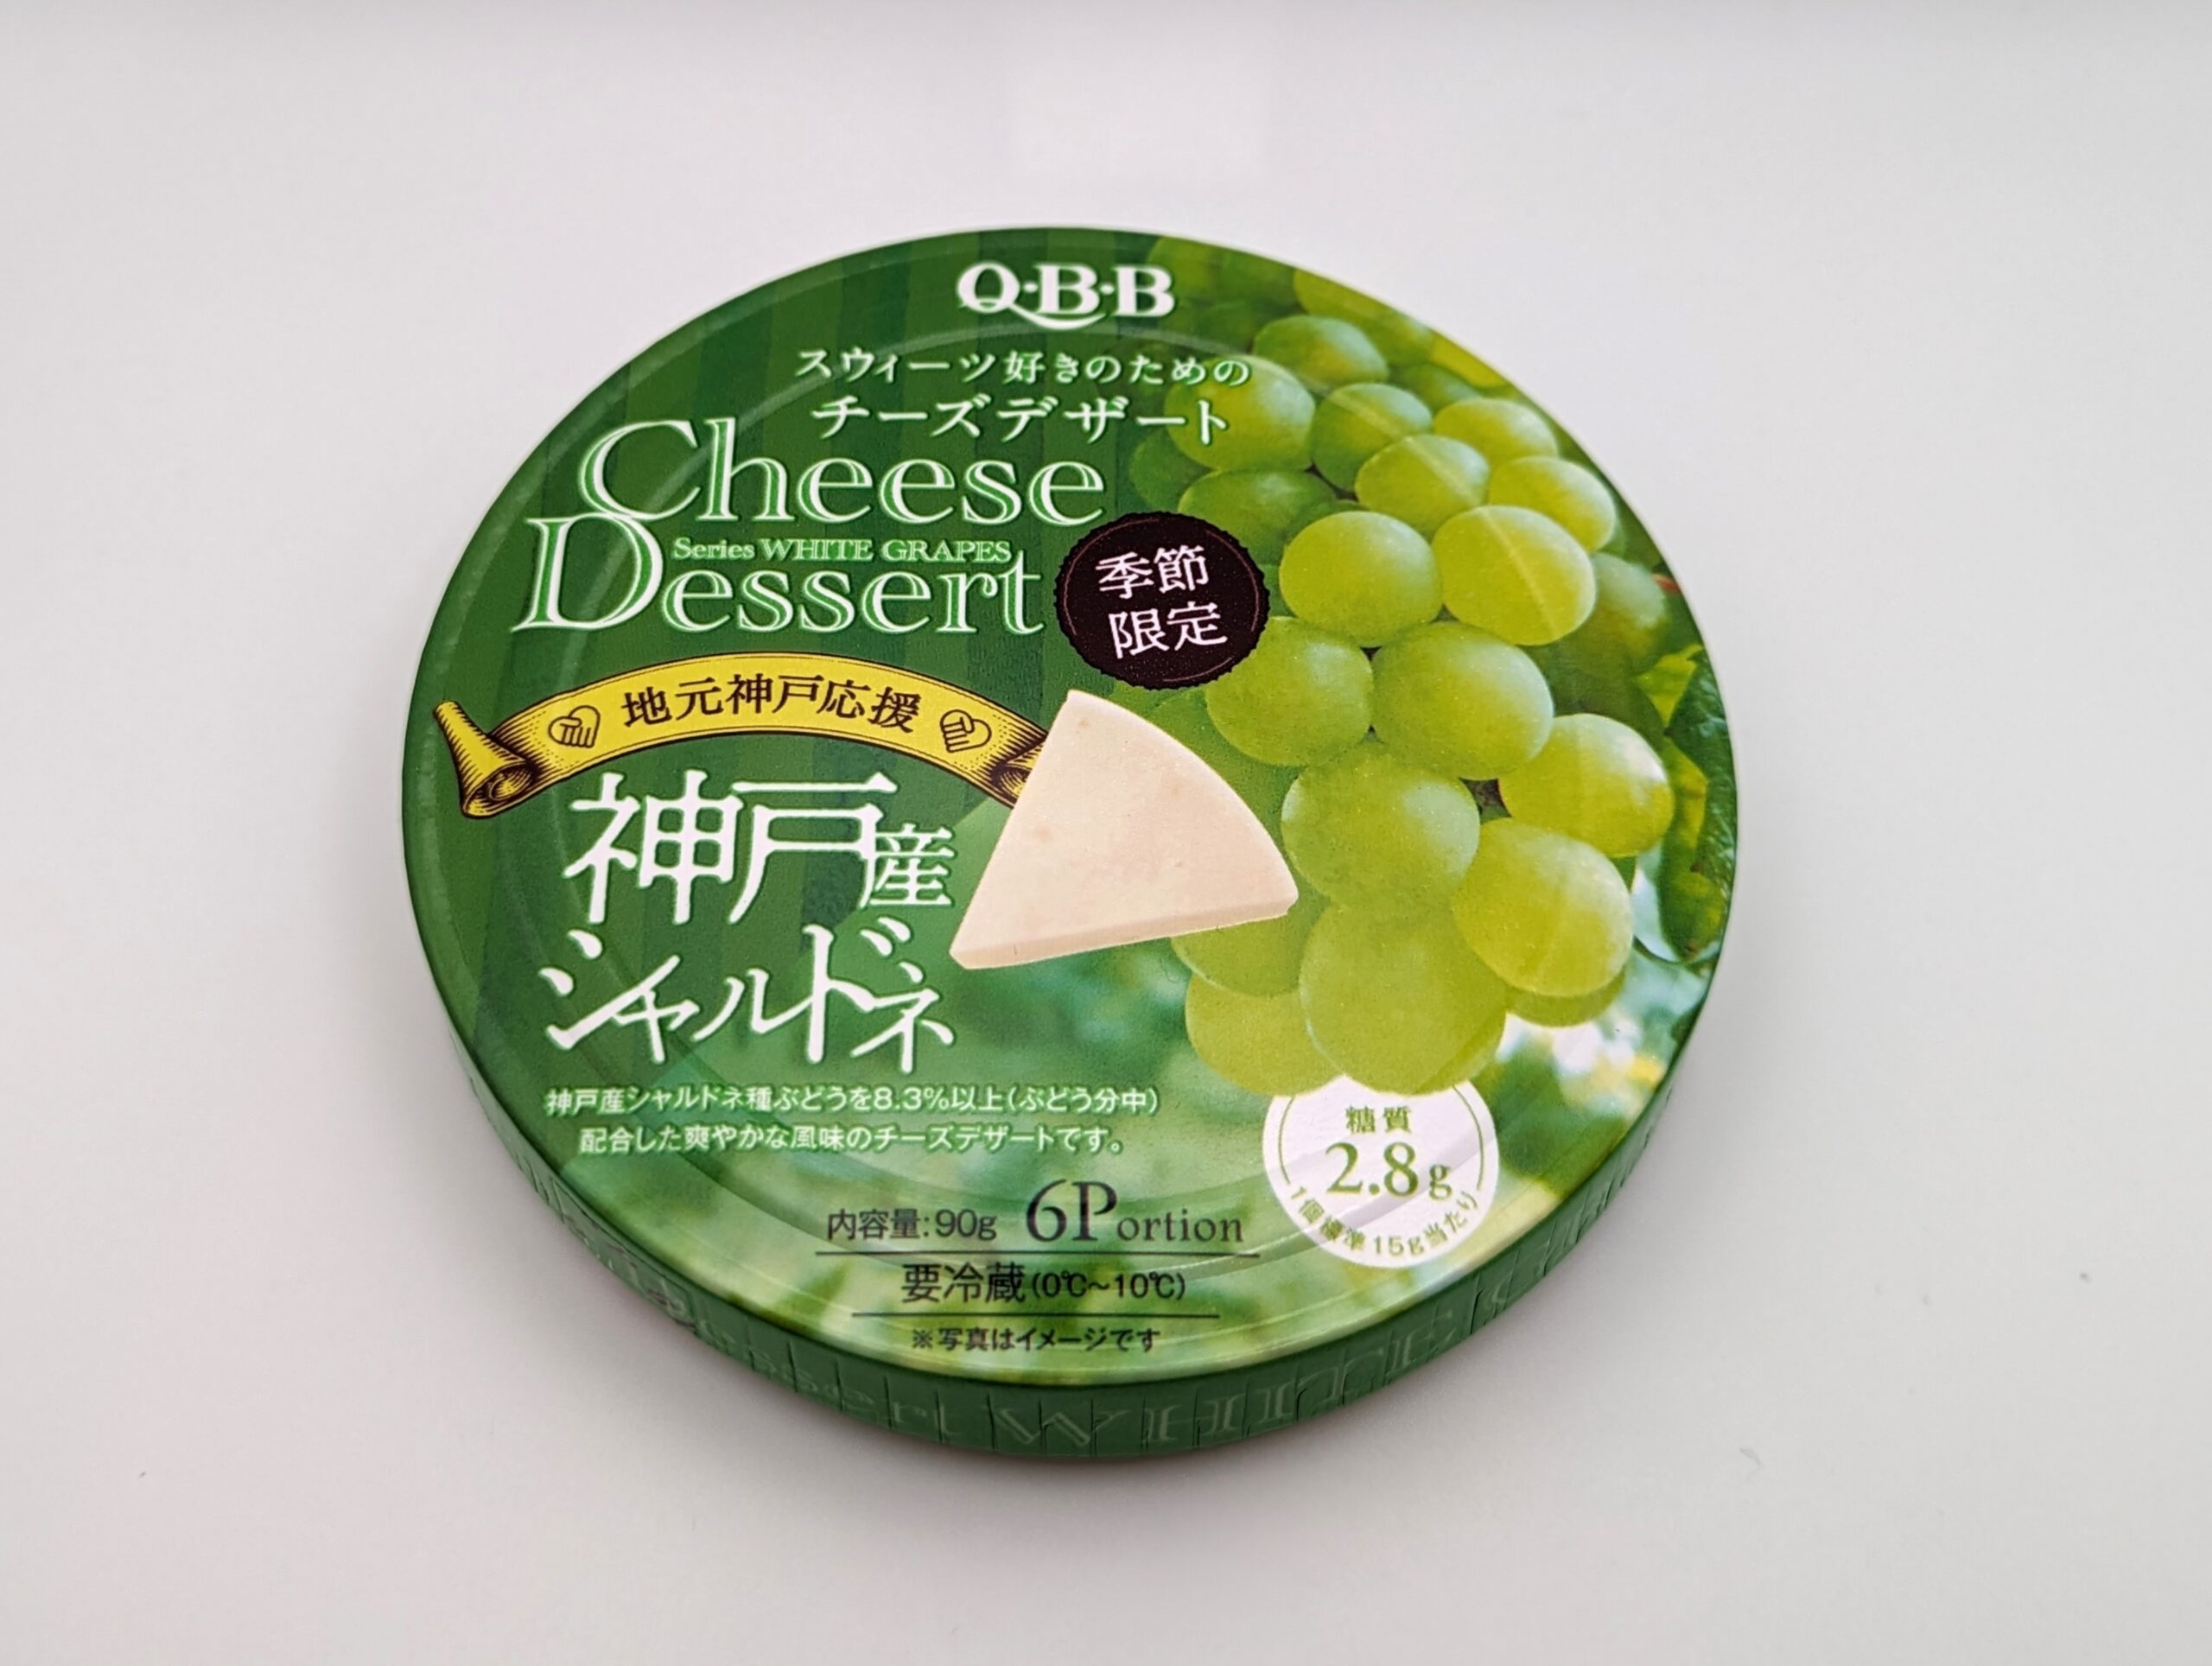 QBB(六甲バター）チーズデザート 神戸産シャルドネの写真 (3)